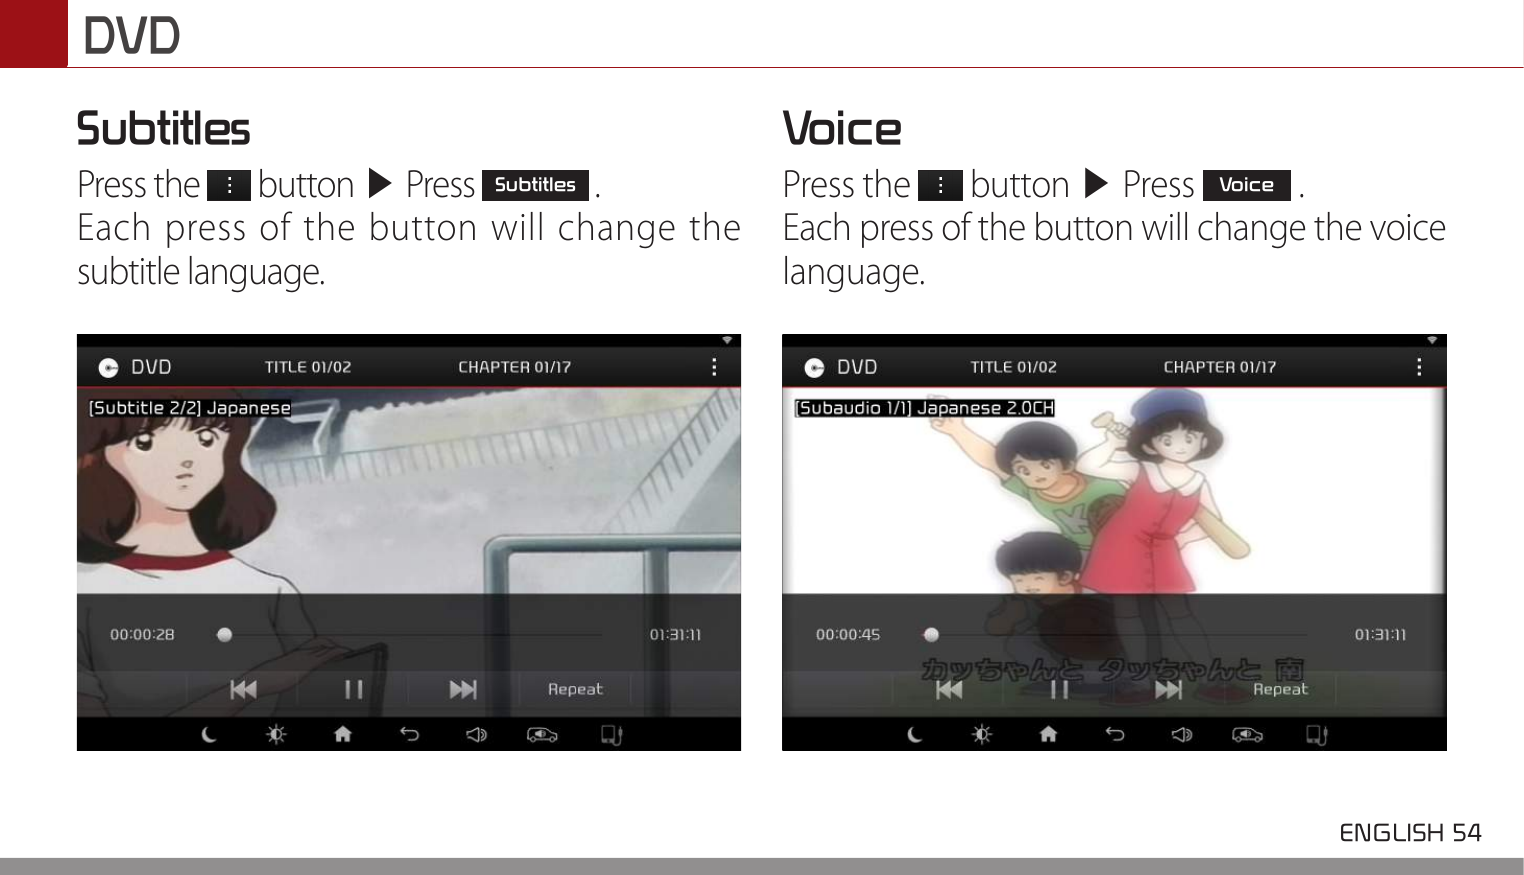 DVD ENGLISH 54 SubtitlesPress the   button ▶ Press Subtitles .Each press of the button will change the subtitle language.VoicePress the   button ▶ Press Voice .Each press of the button will change the voice language.